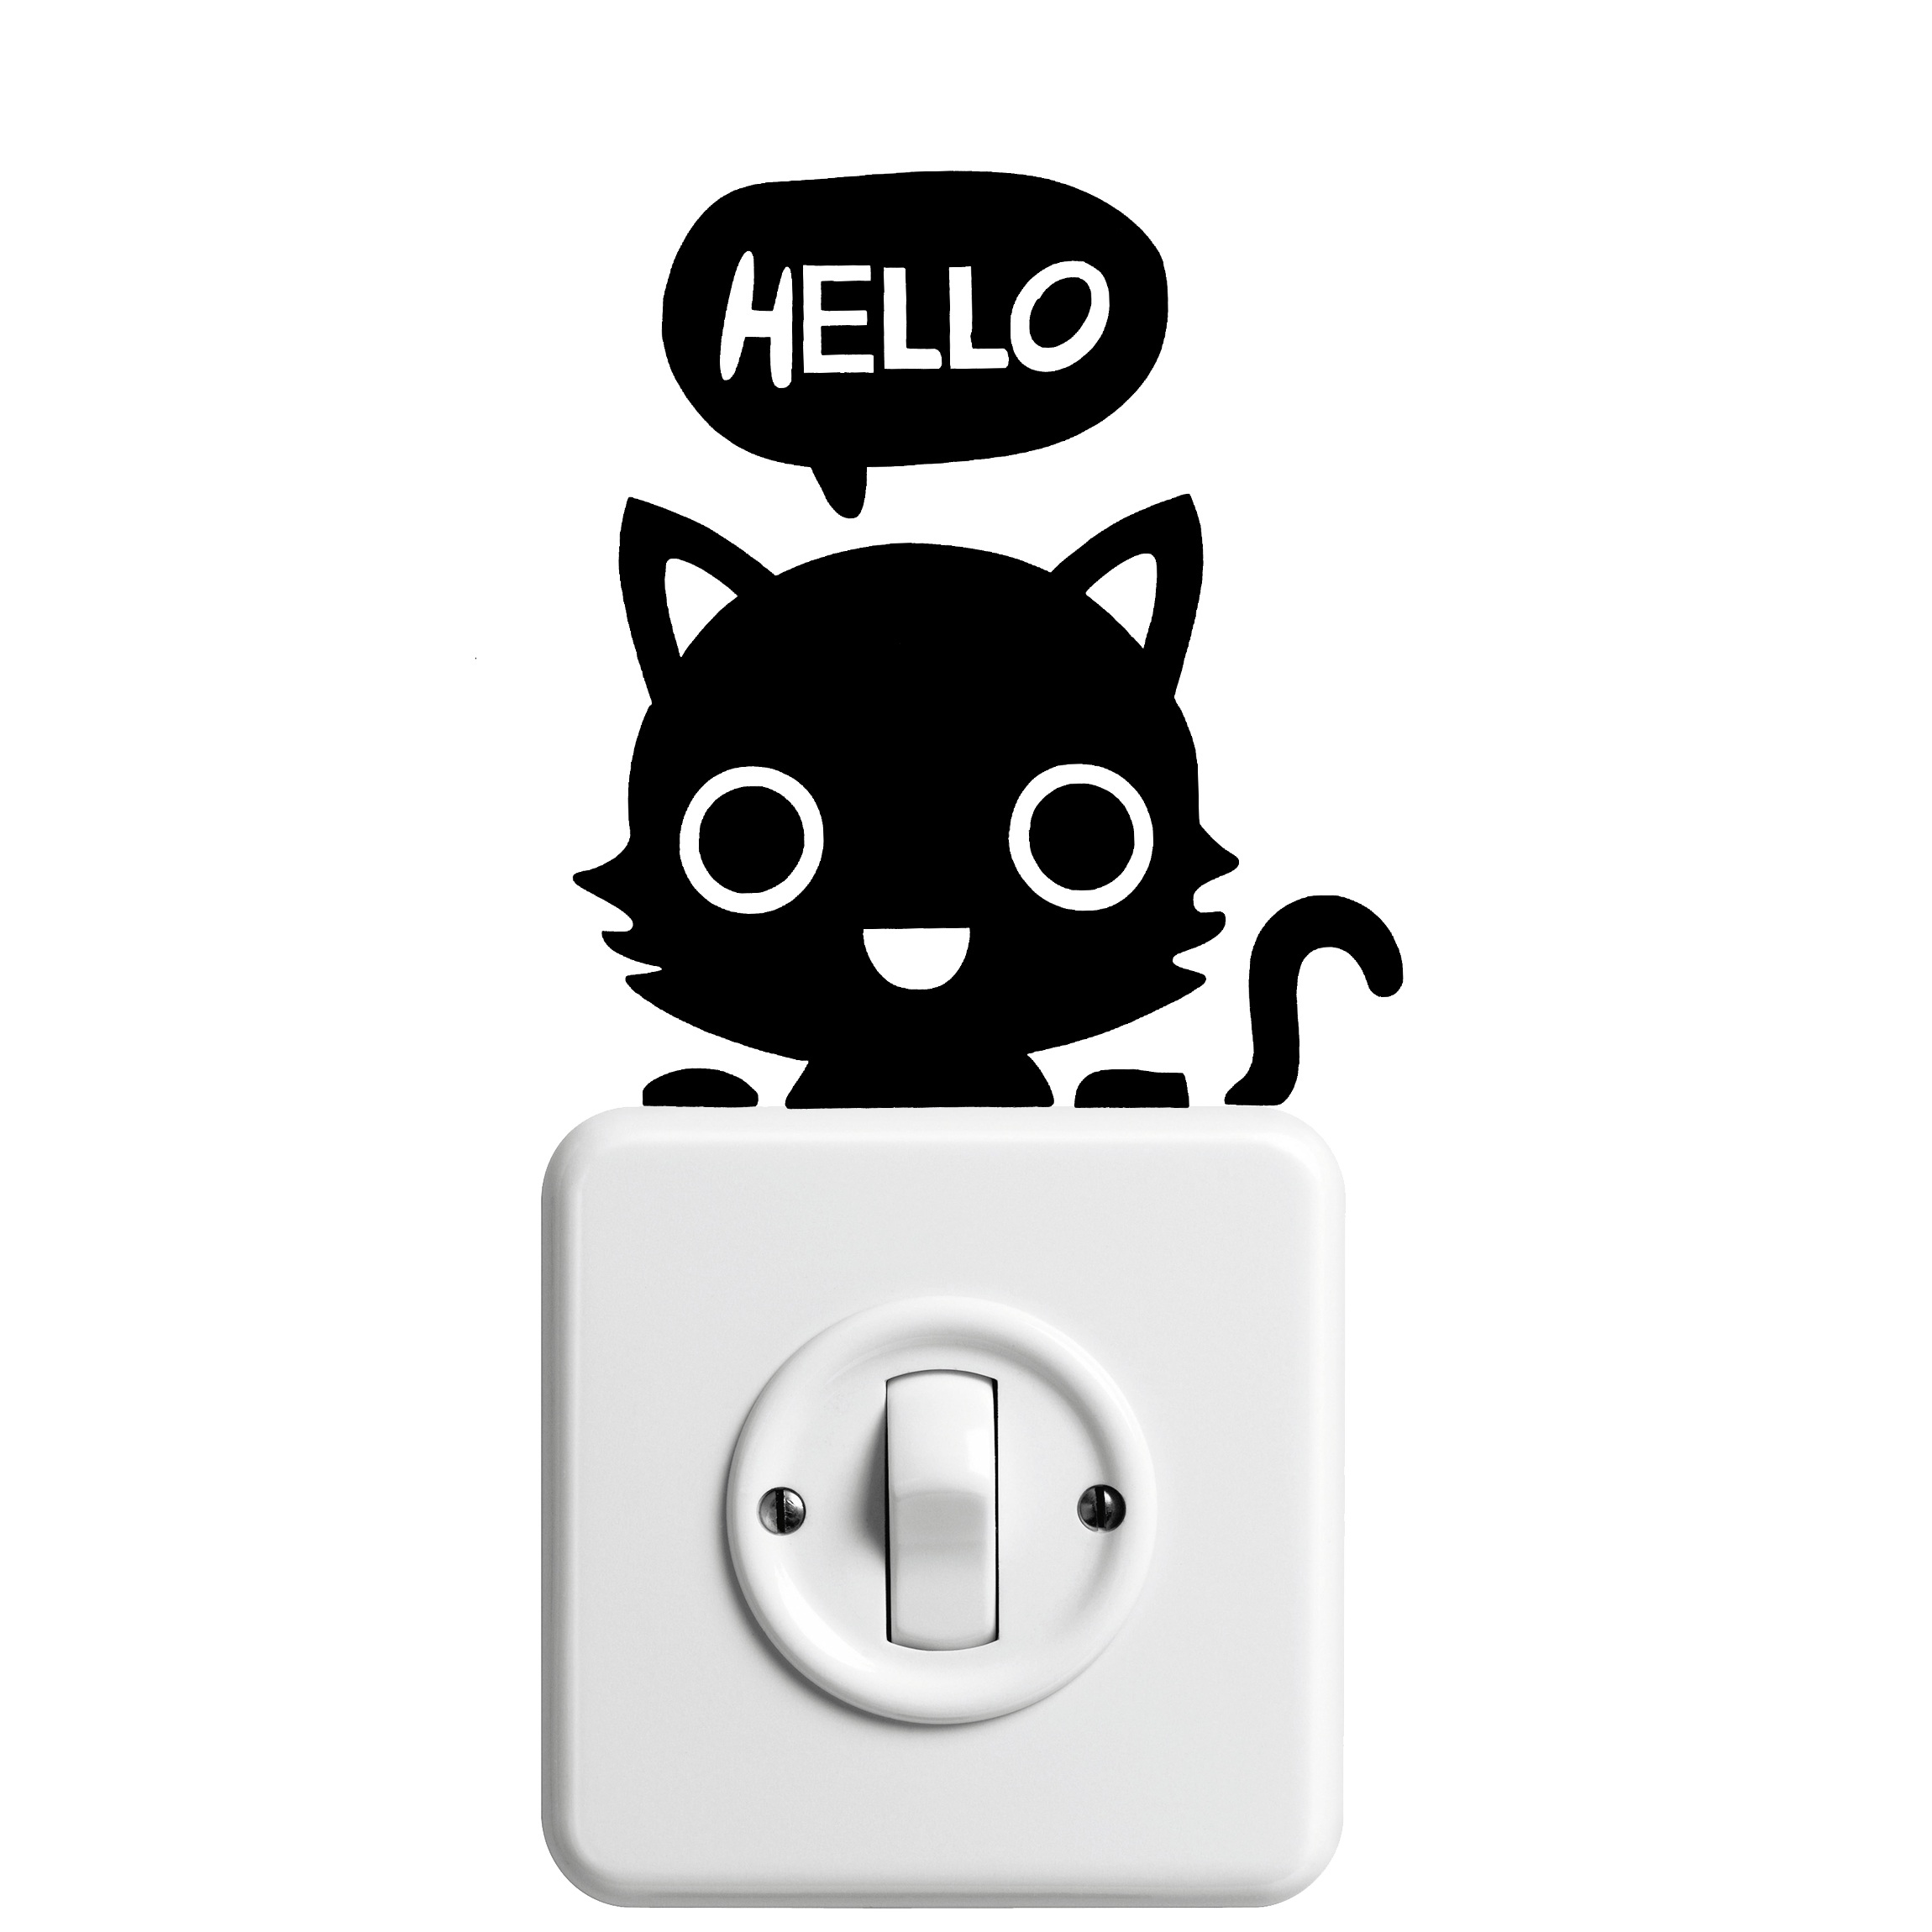 pet-portrait-kitten-cat-black-hello-674490-pxhere.com